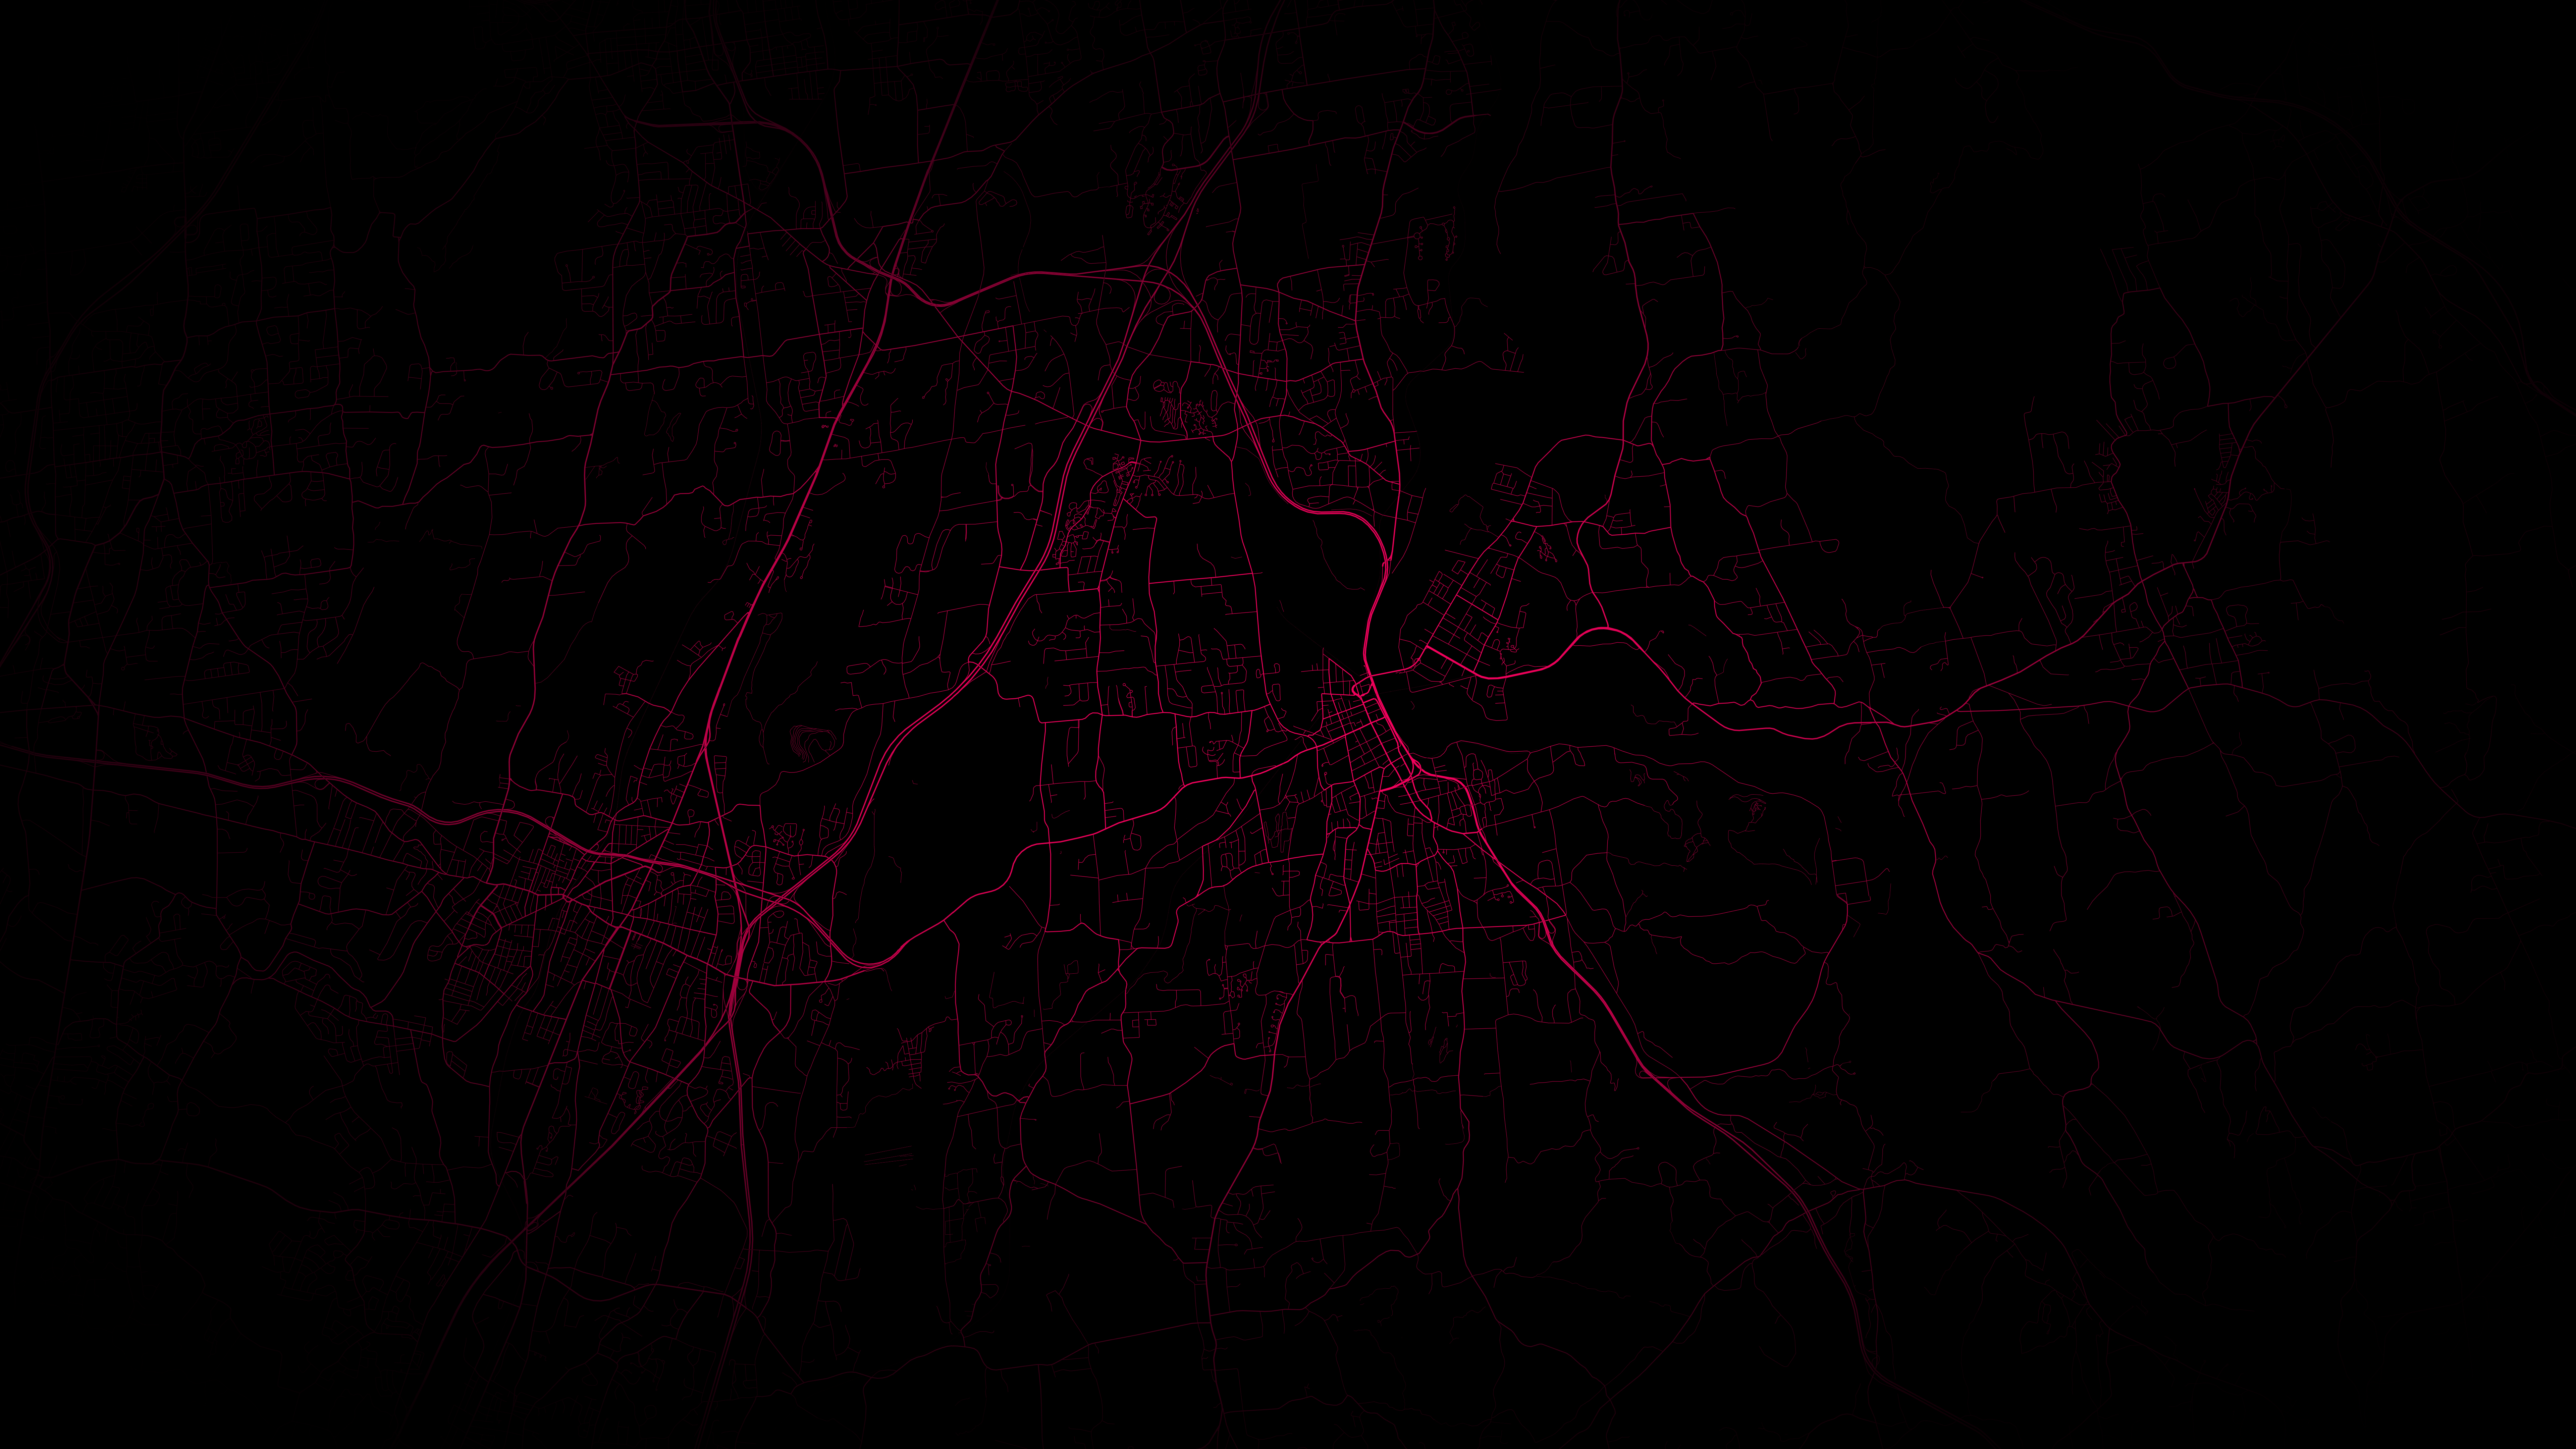 General 7680x4320 map lines digital art red black background dark background